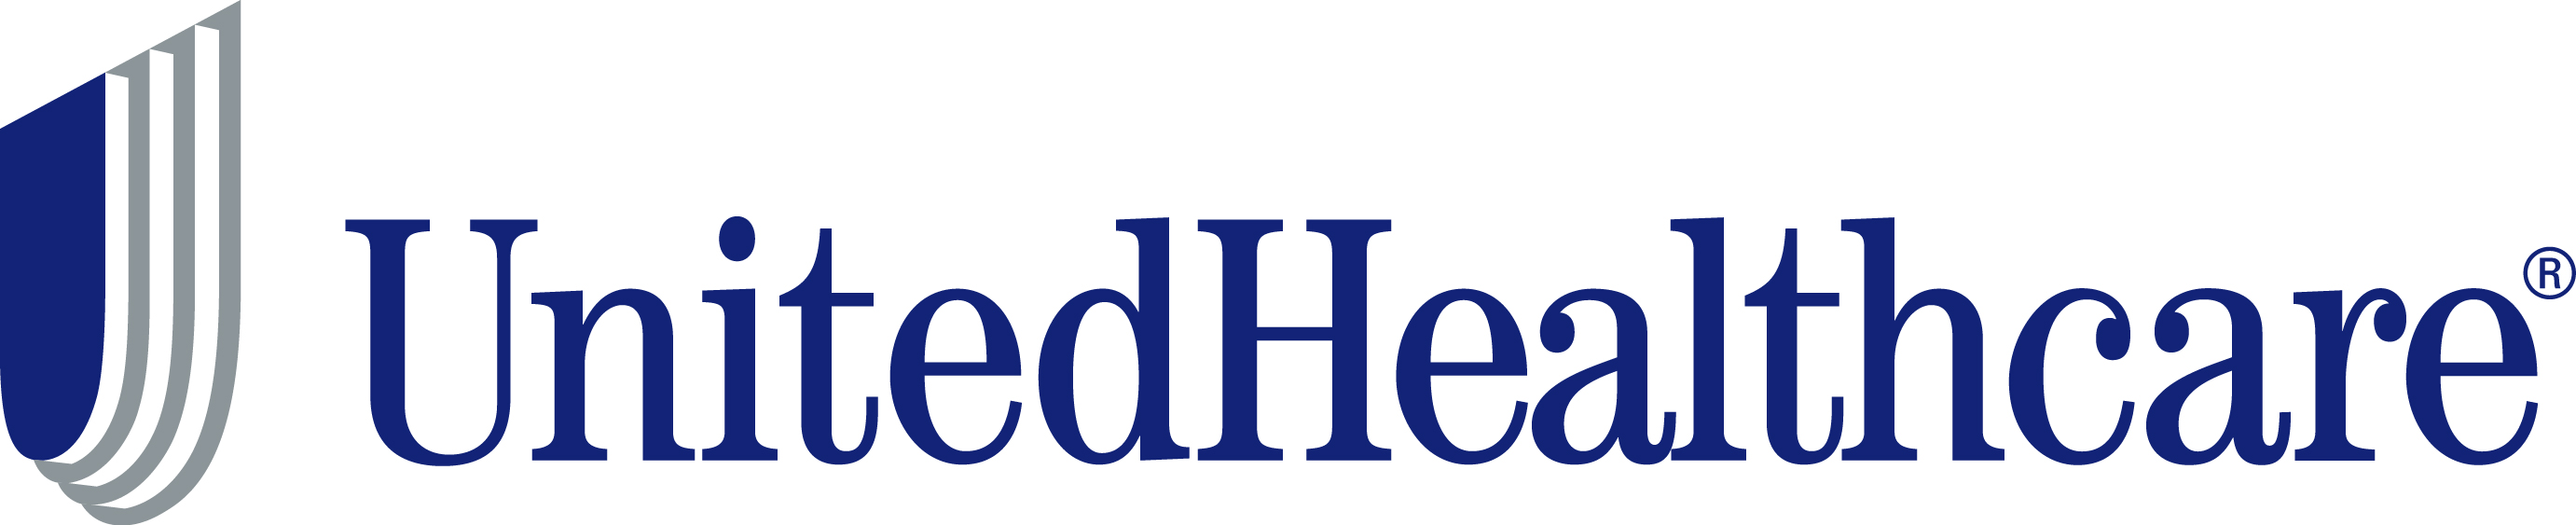 UnitedHealthcare/Medicare & Retirement